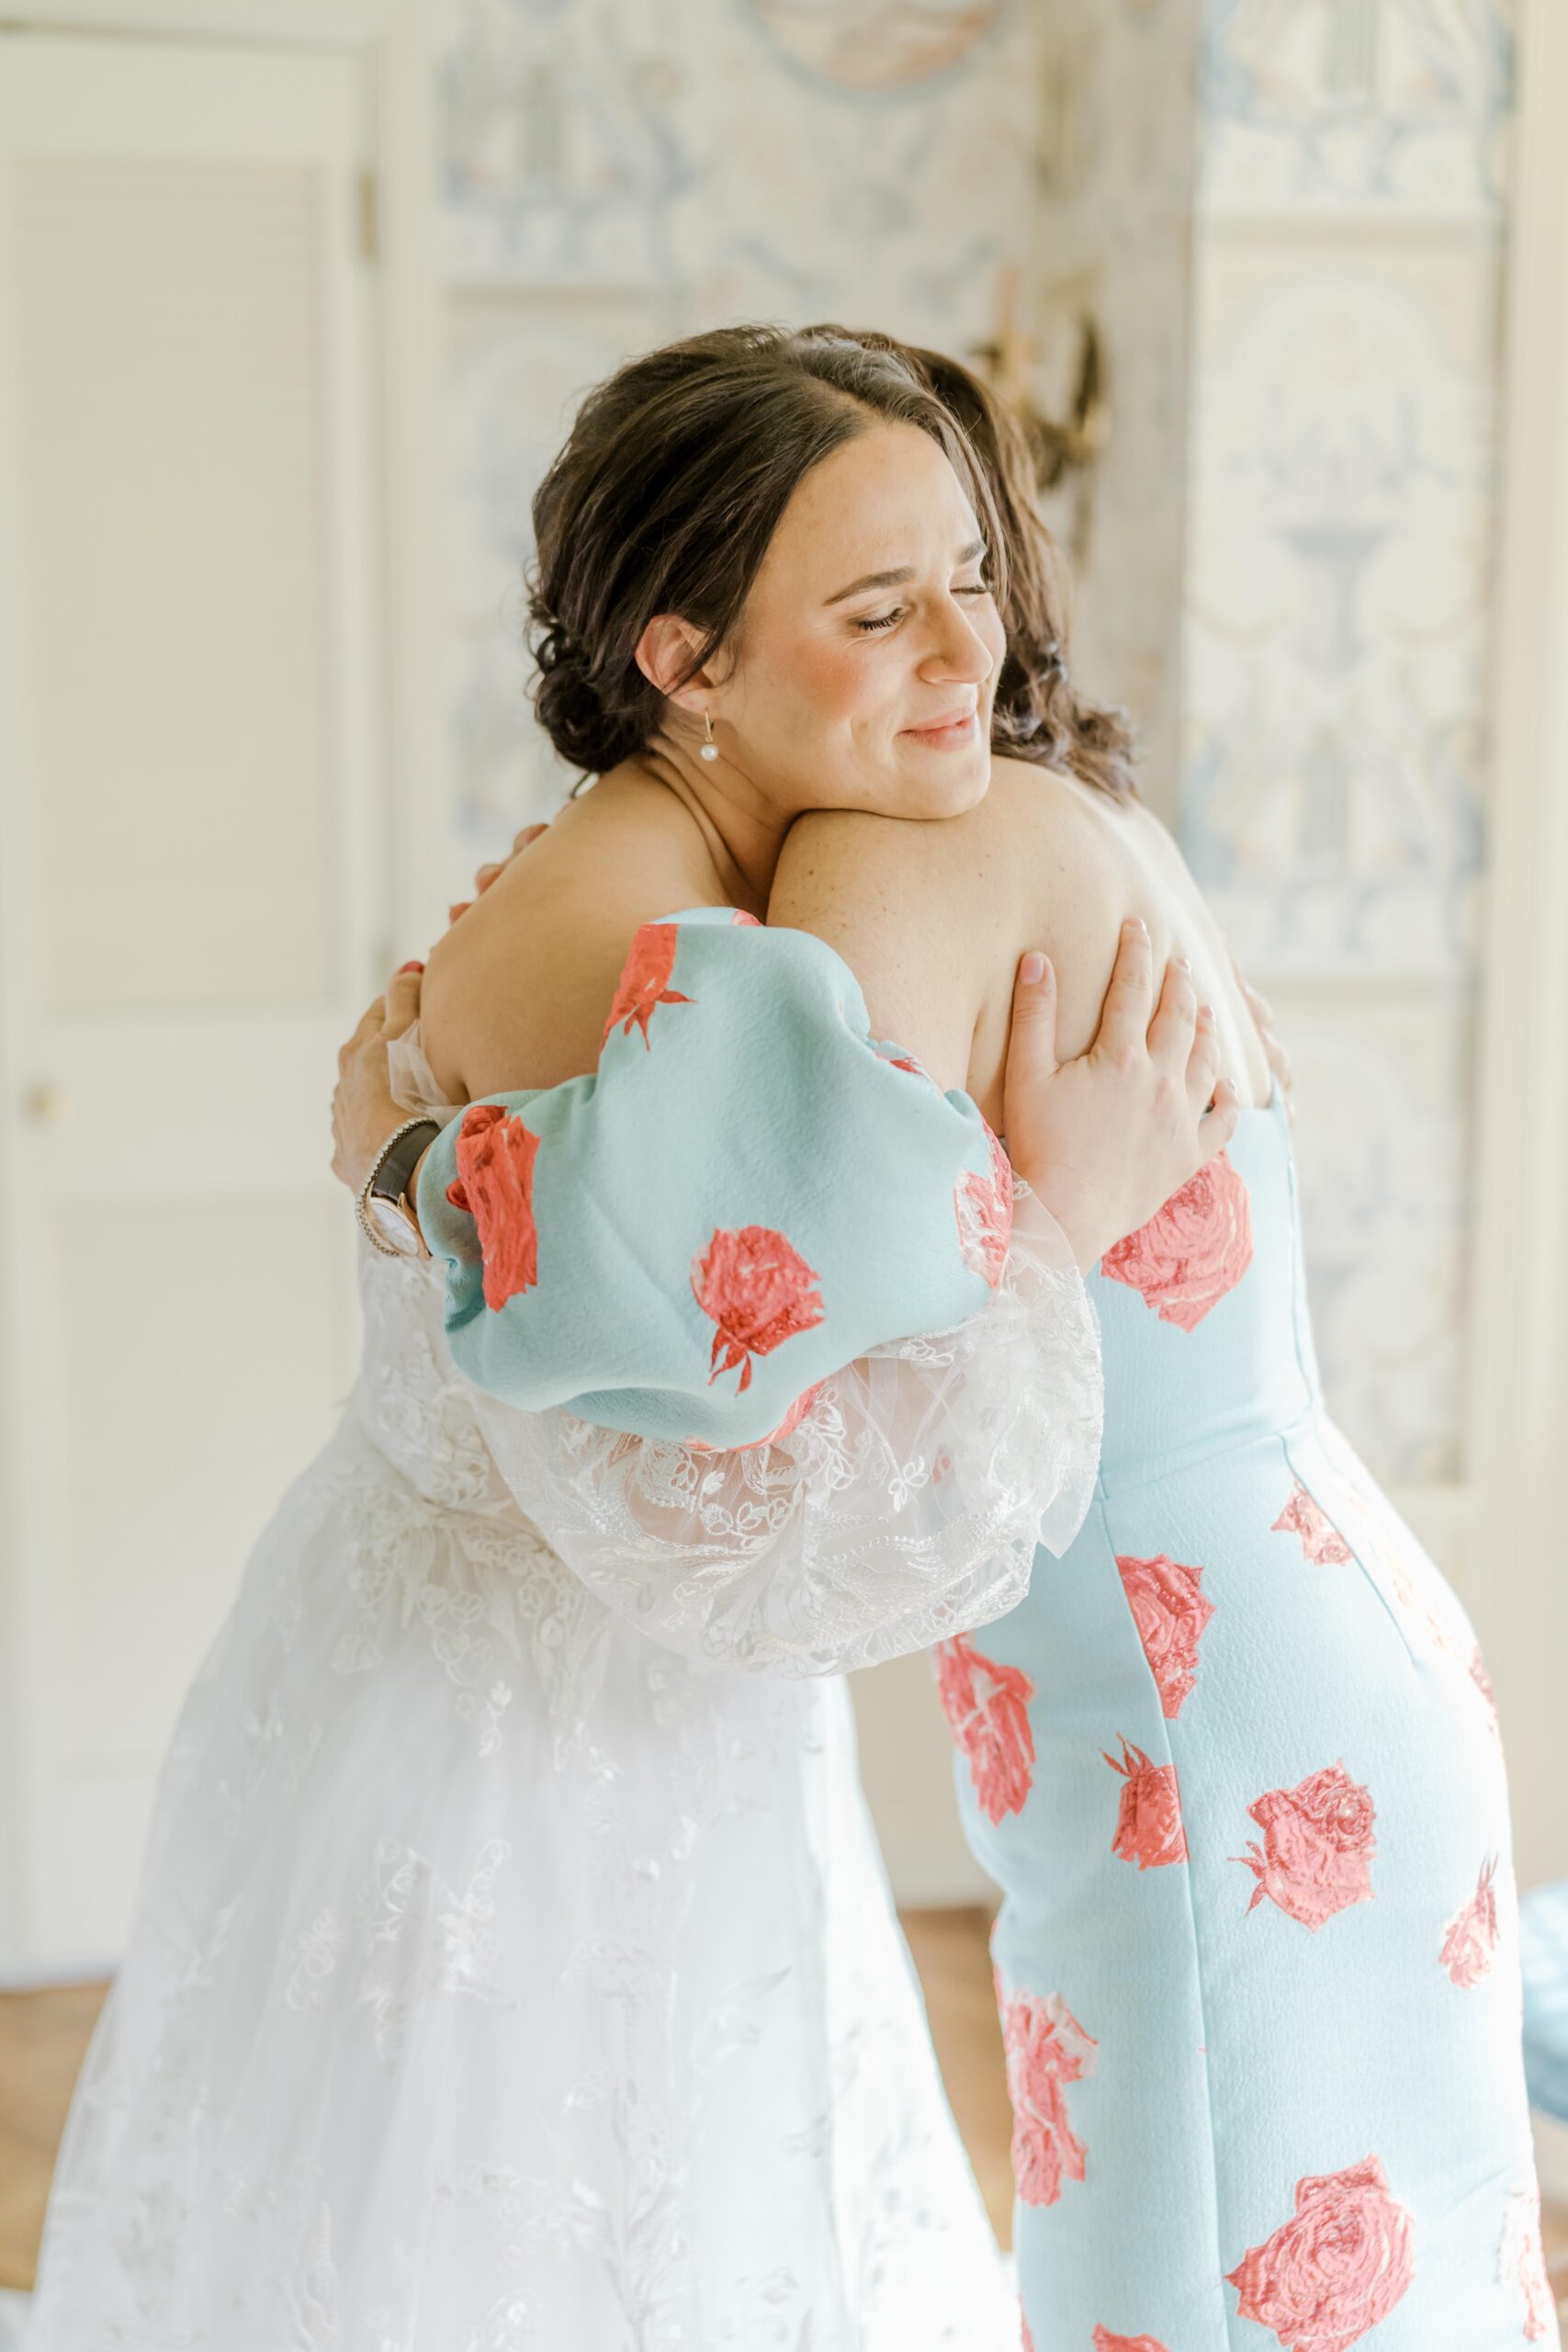 Bride and mother hug at Pittsburgh wedding